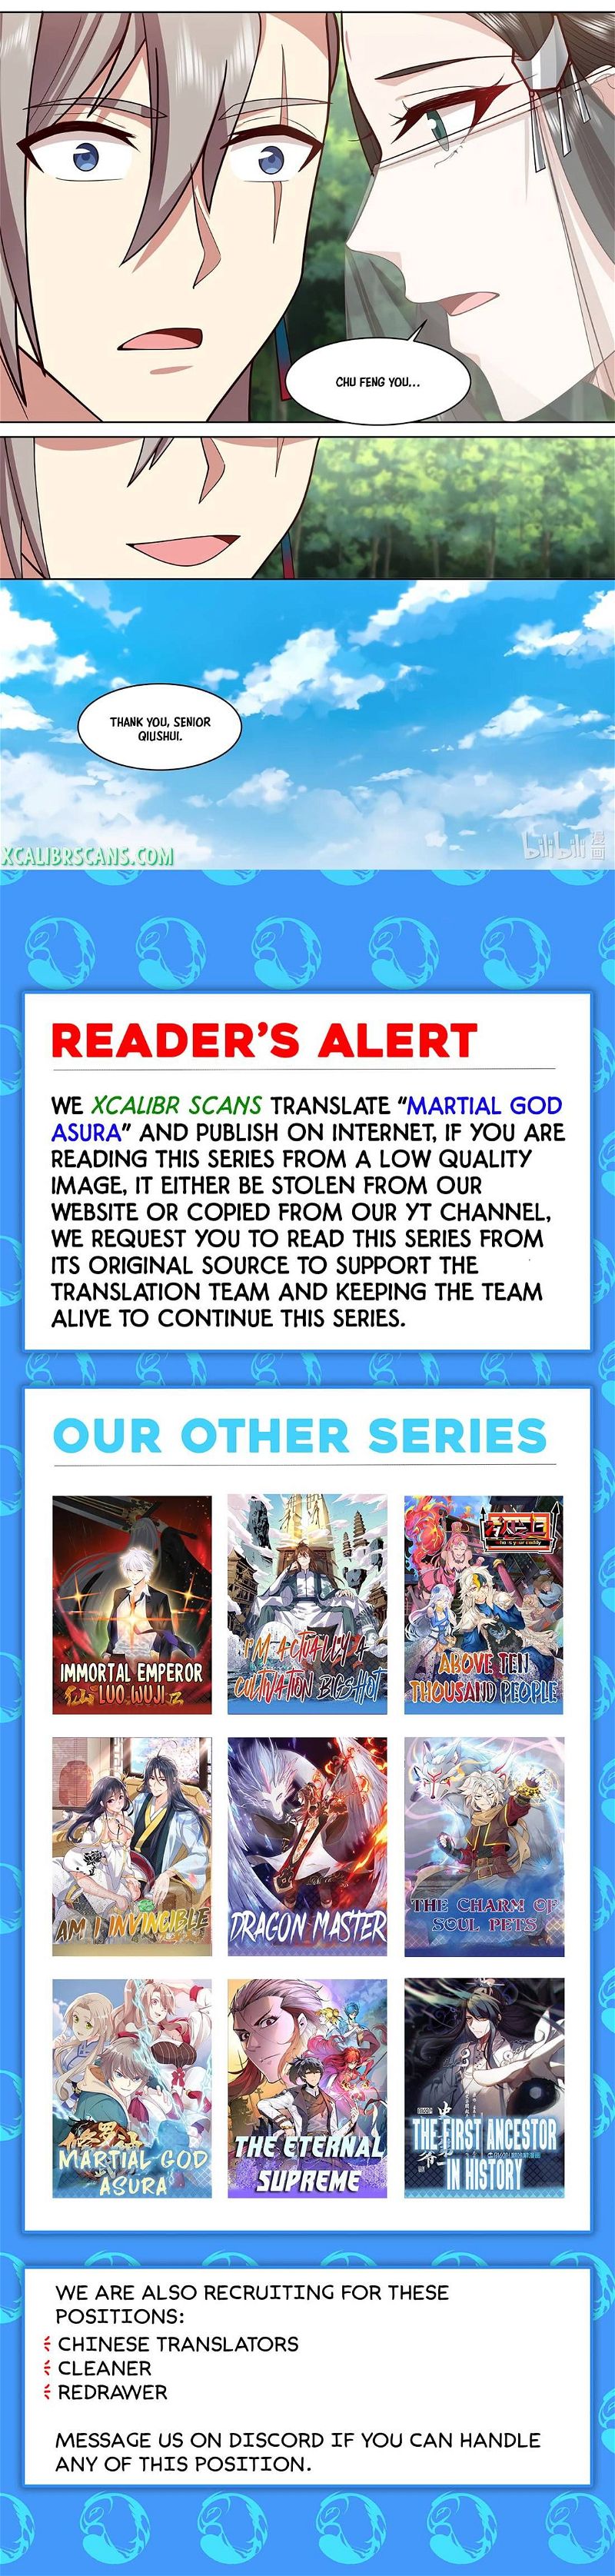 Martial God Asura Chapter 484 page 10